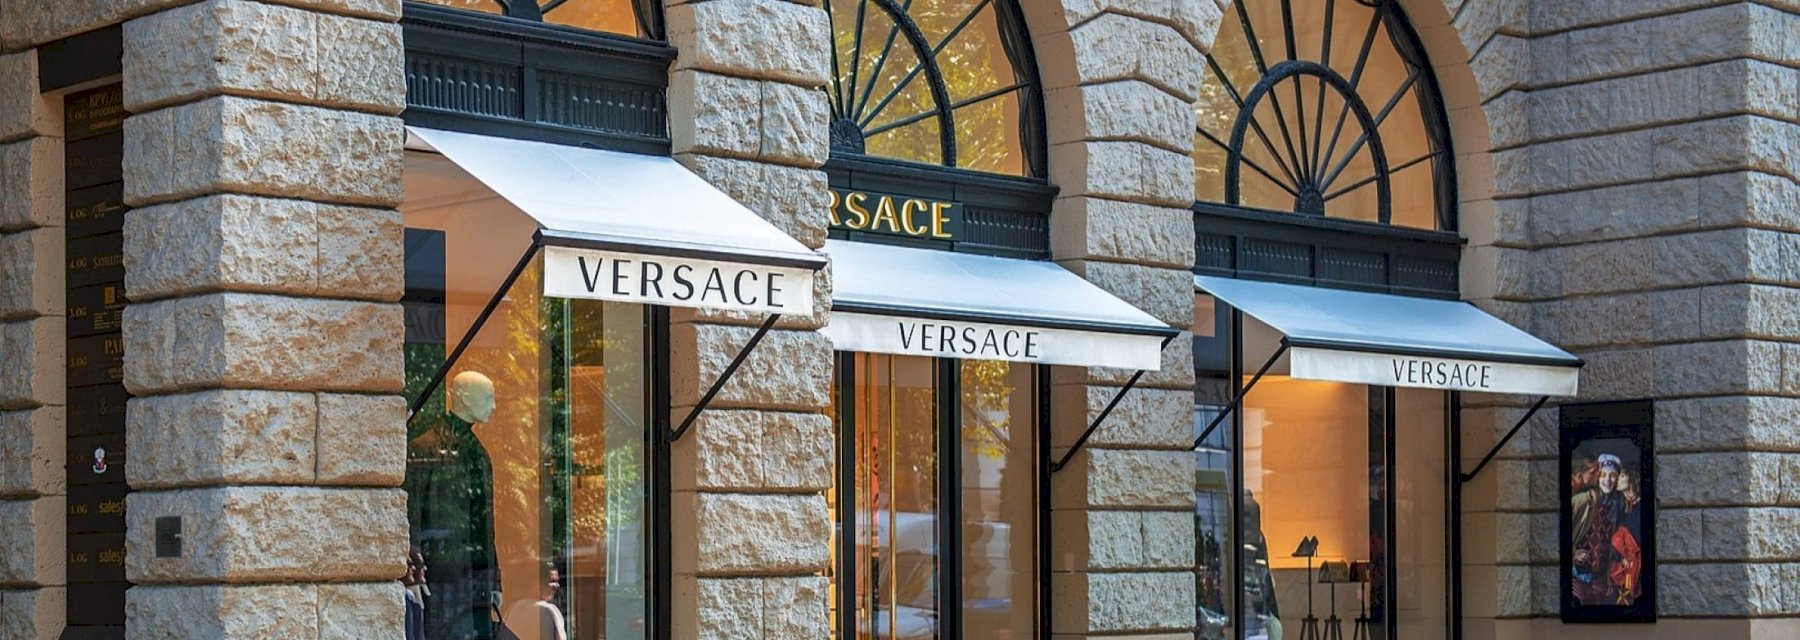 How Gianni Versace became a legendary fashion designer